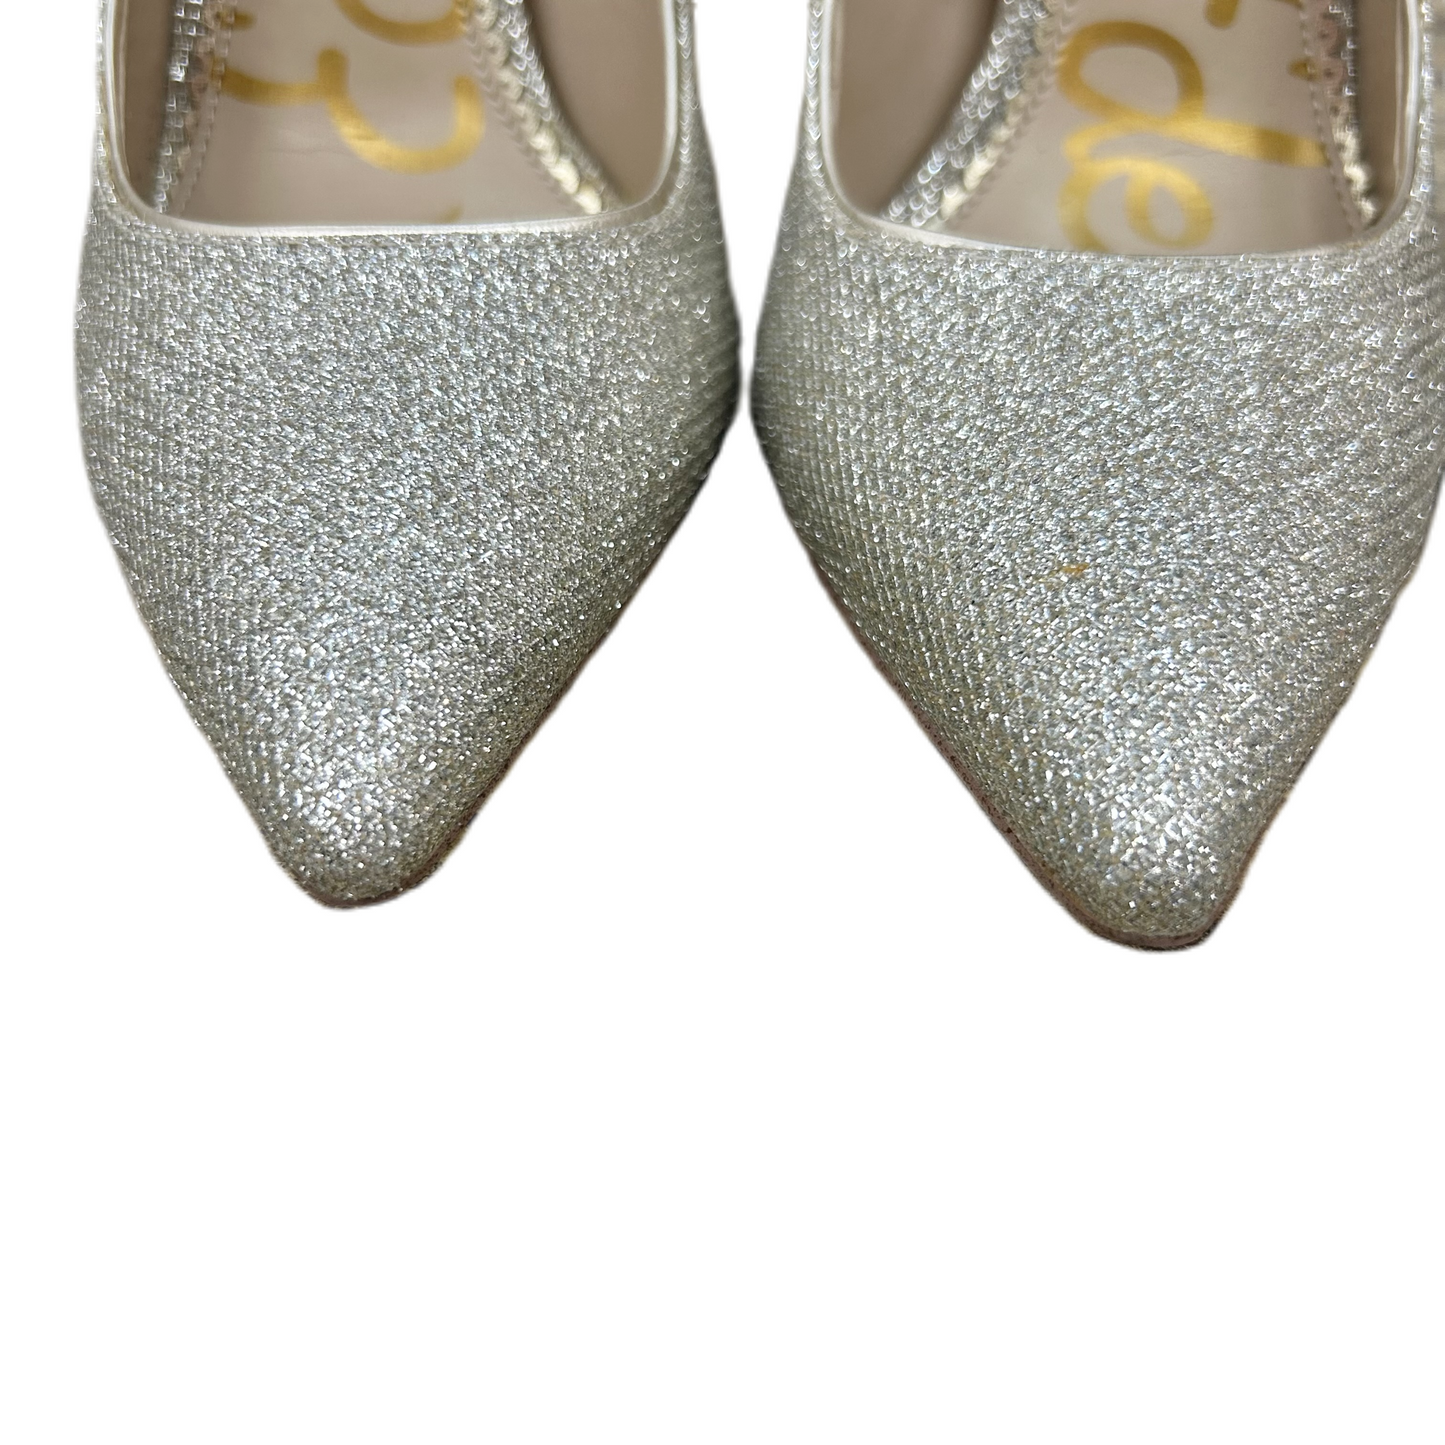 Gold Shoes Heels Stiletto By Sam Edelman, Size: 9